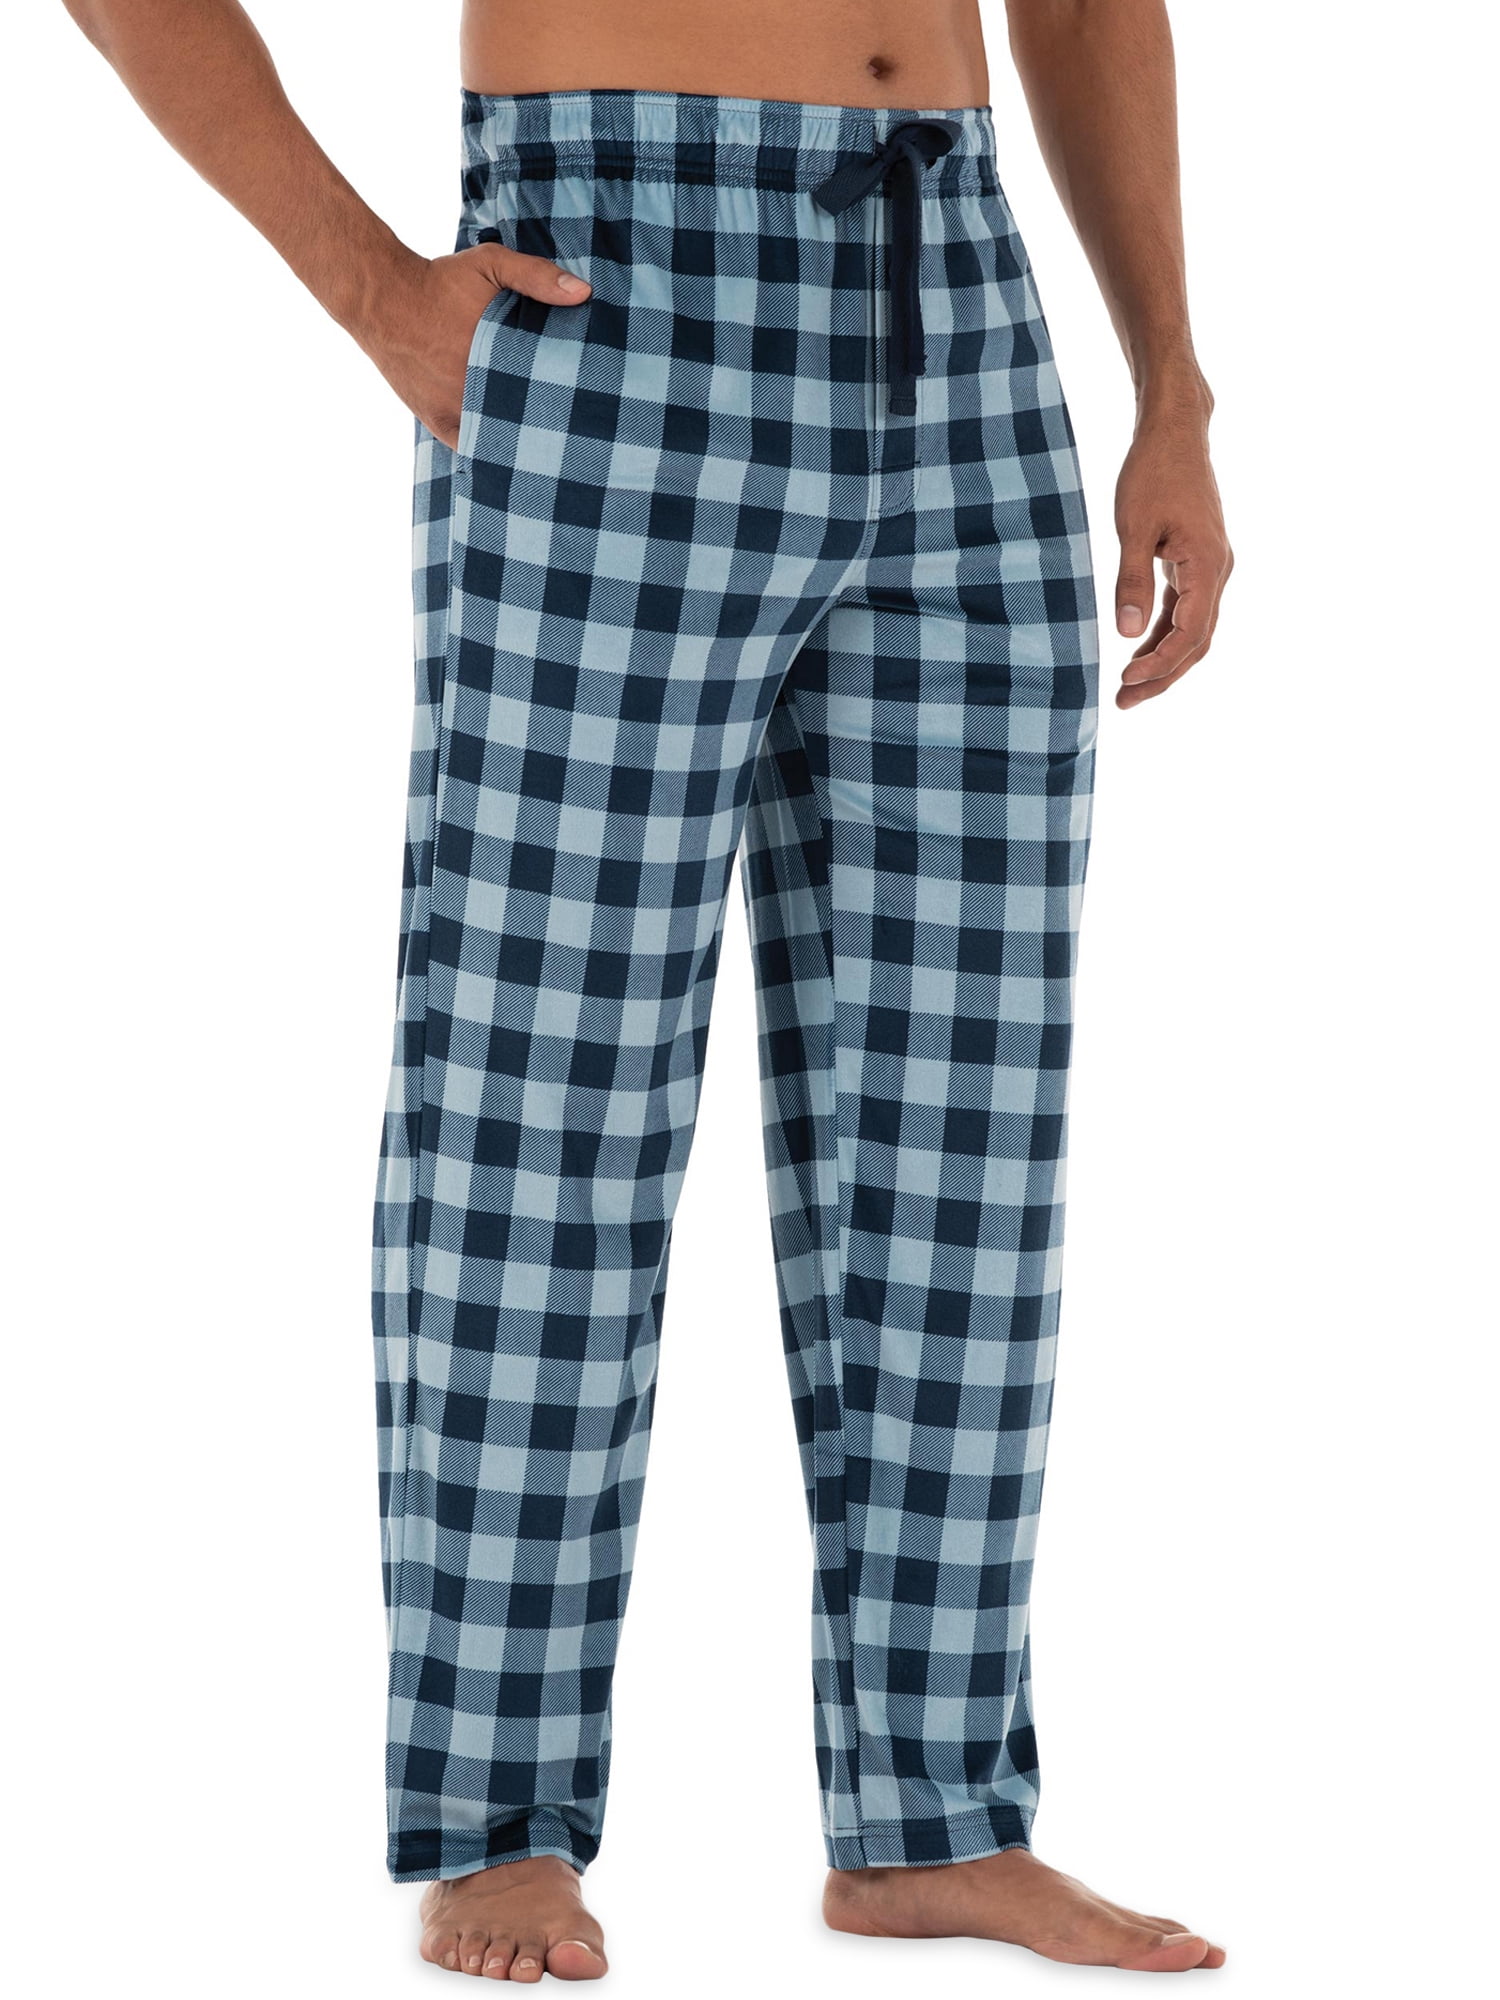 Pajama Pants in Men average savings of 61% at Sierra